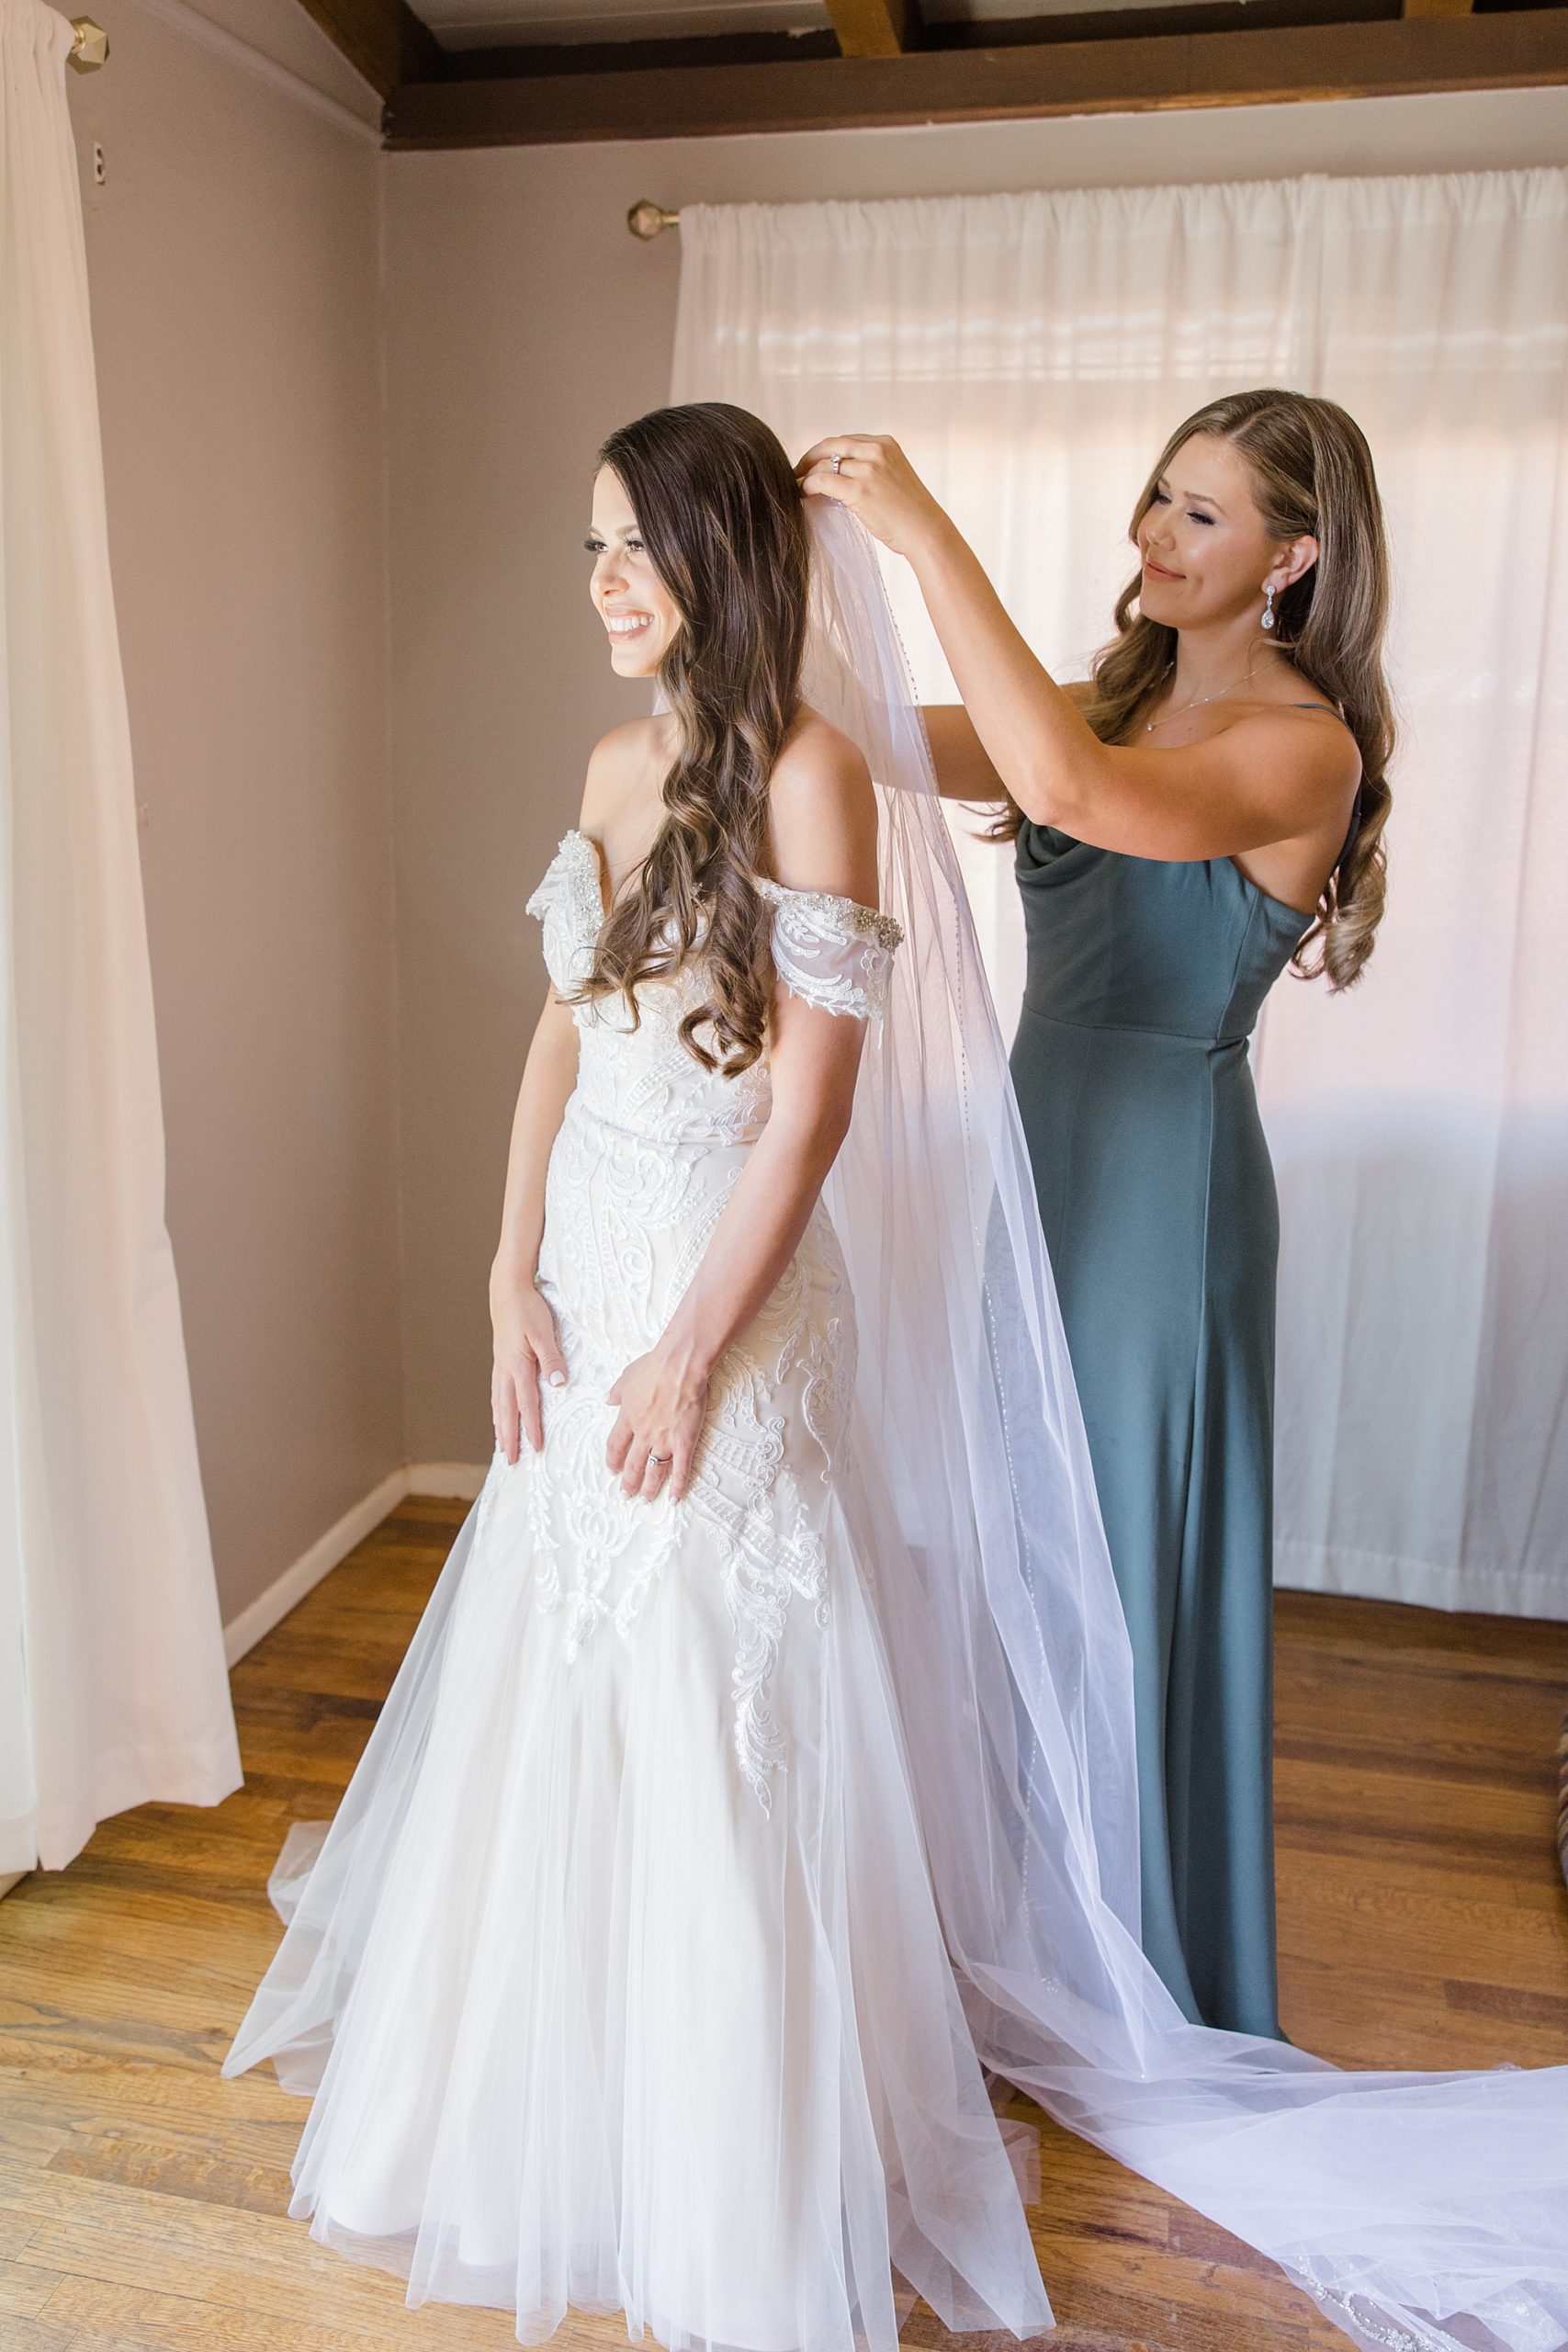 bridesmaid helps bride with veil before intimate Sedona wedding day